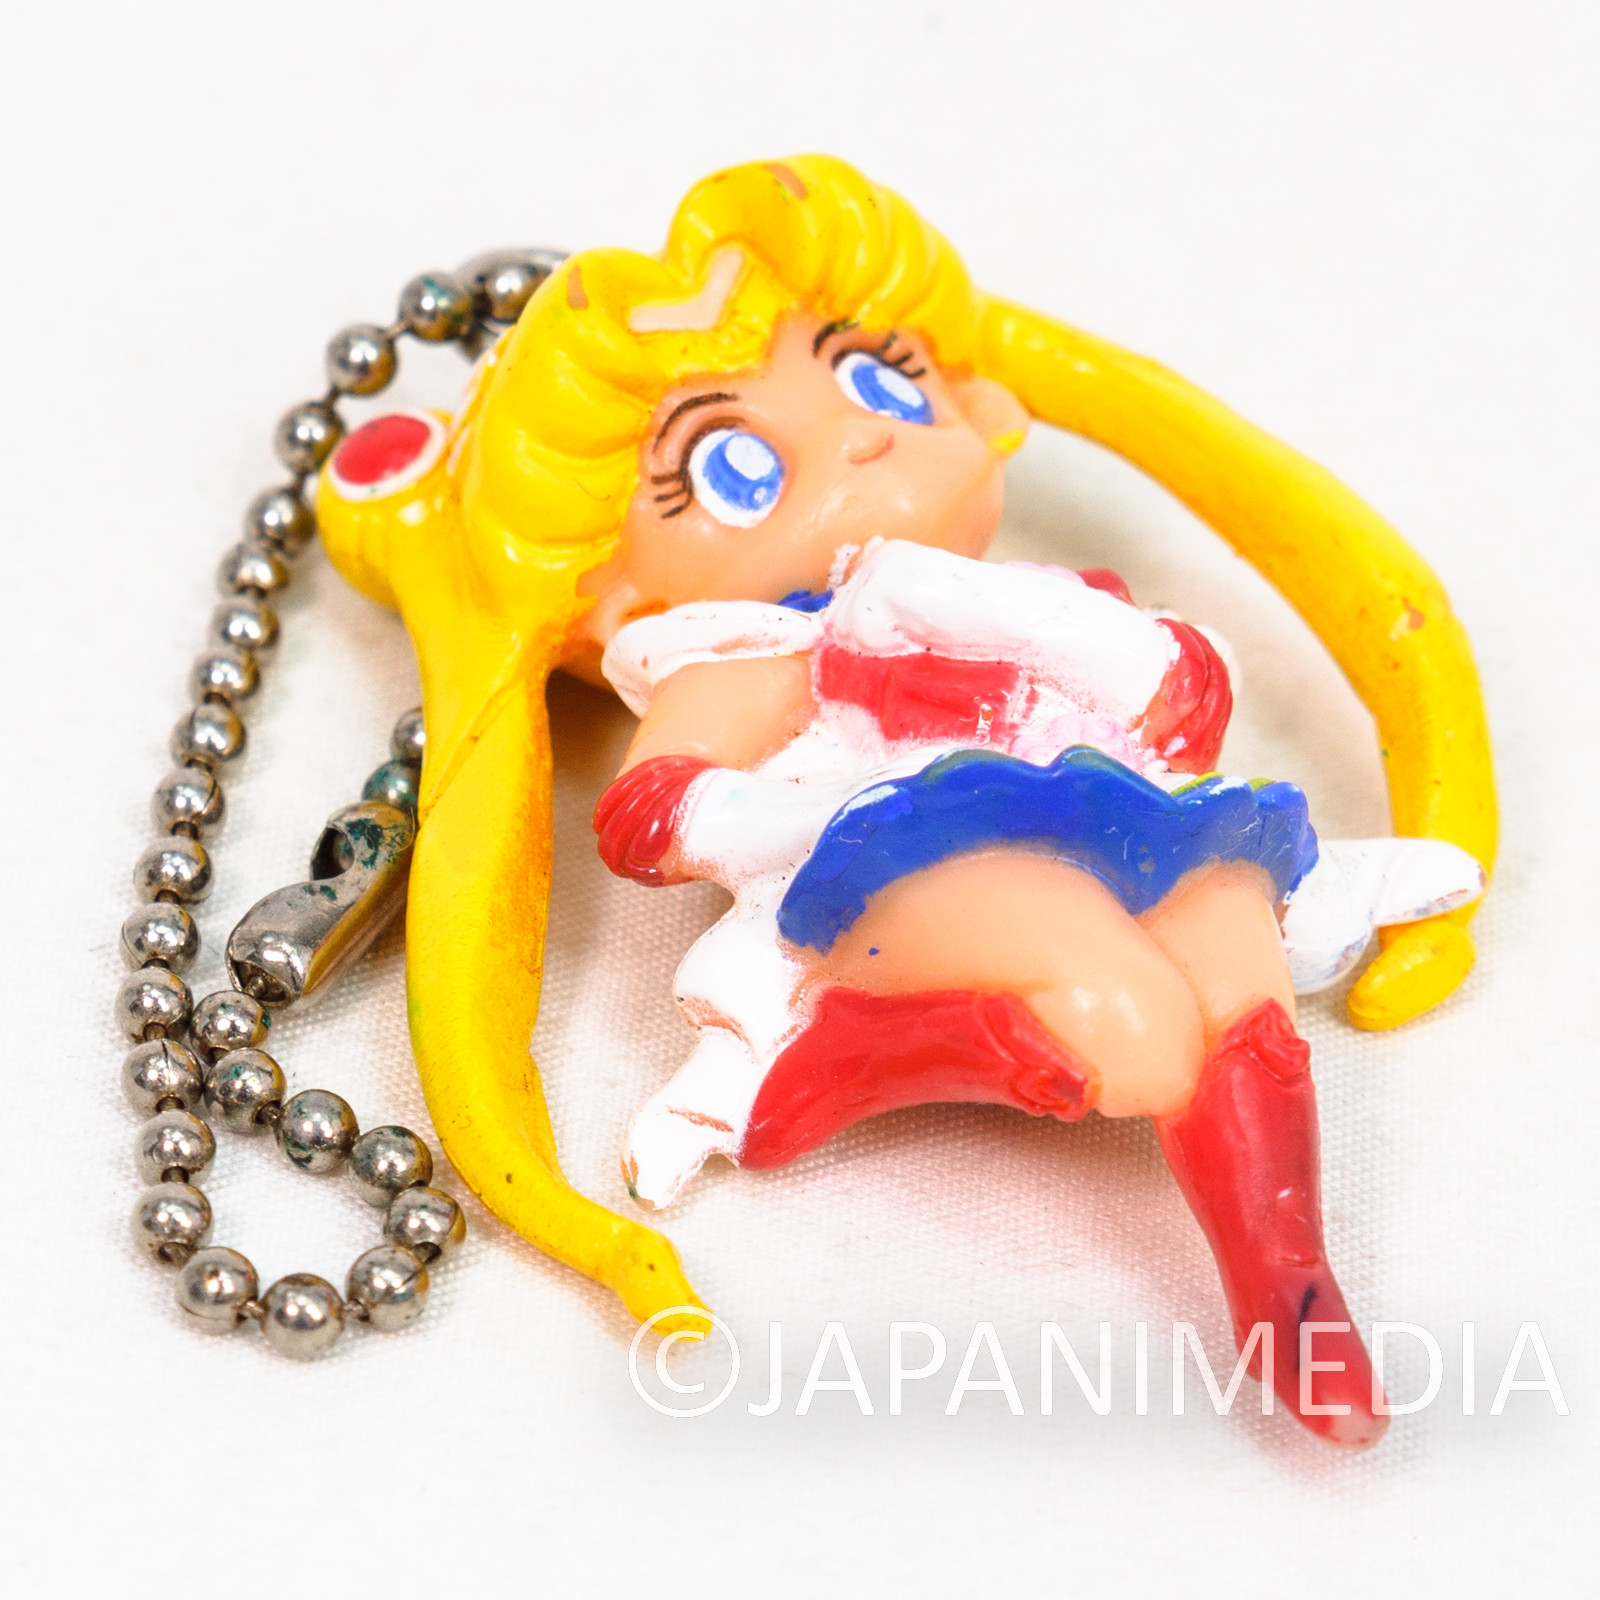 Sailor Moon Usagi Tsukino Figure Ballchain JAPAN ANIME MANGA 3 -  Japanimedia Store